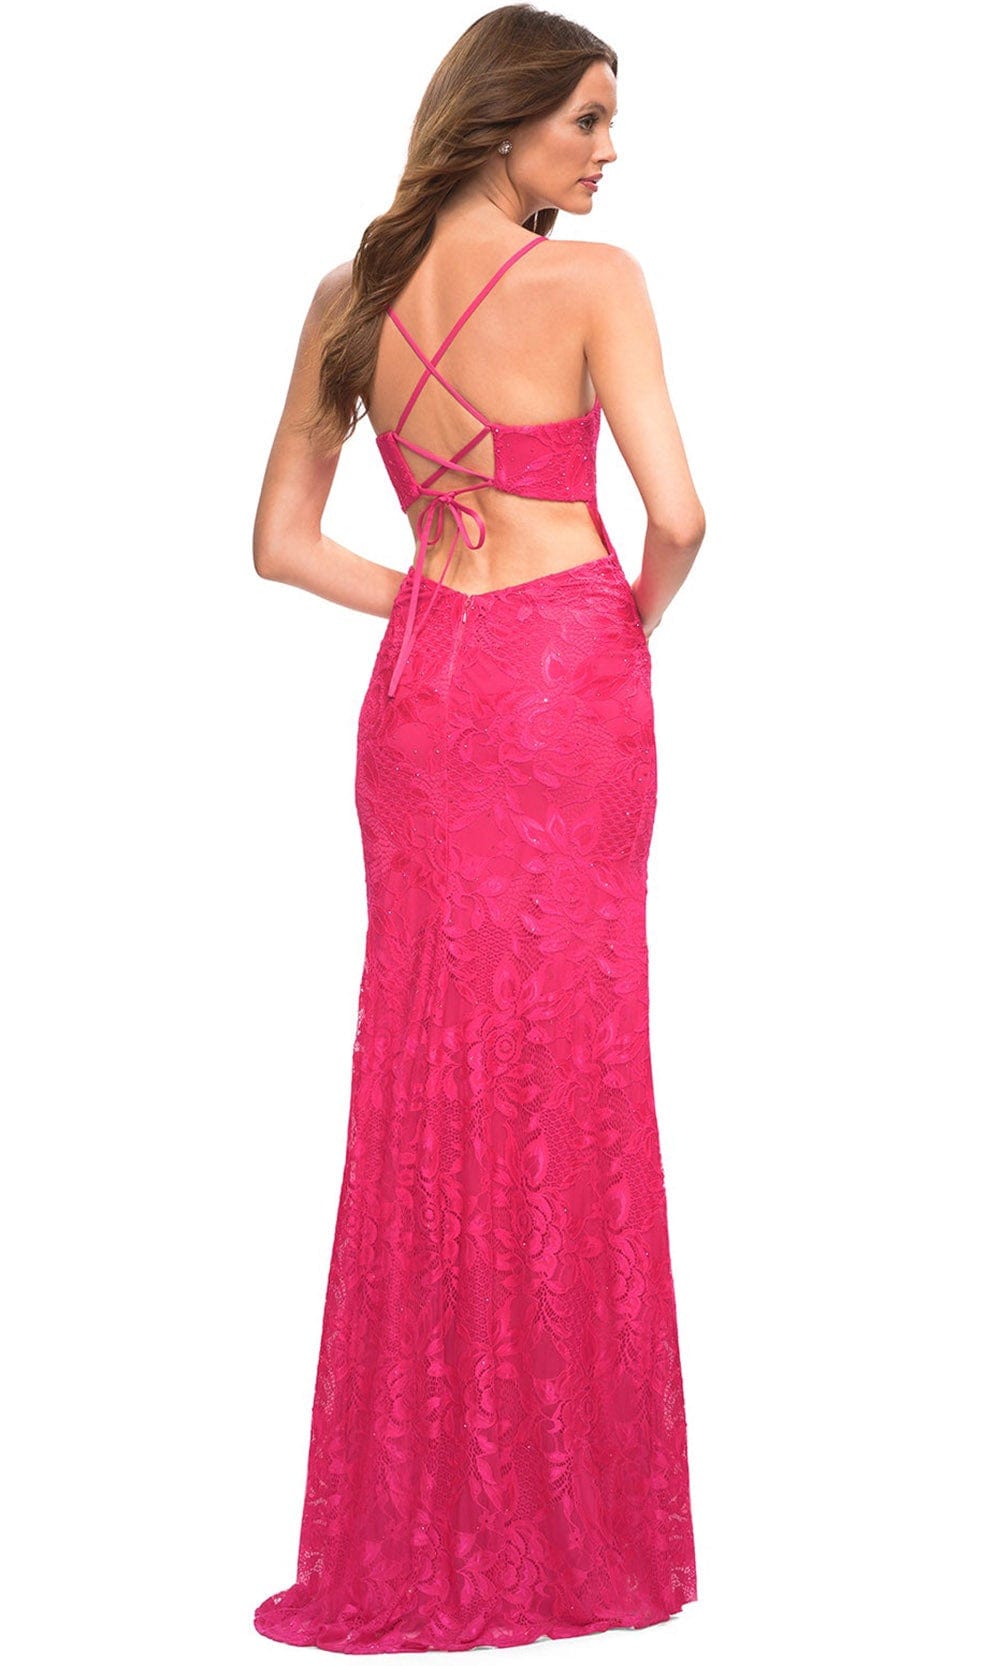 La Femme 30686 - Floral Sheath Evening Dress Special Occasion Dress